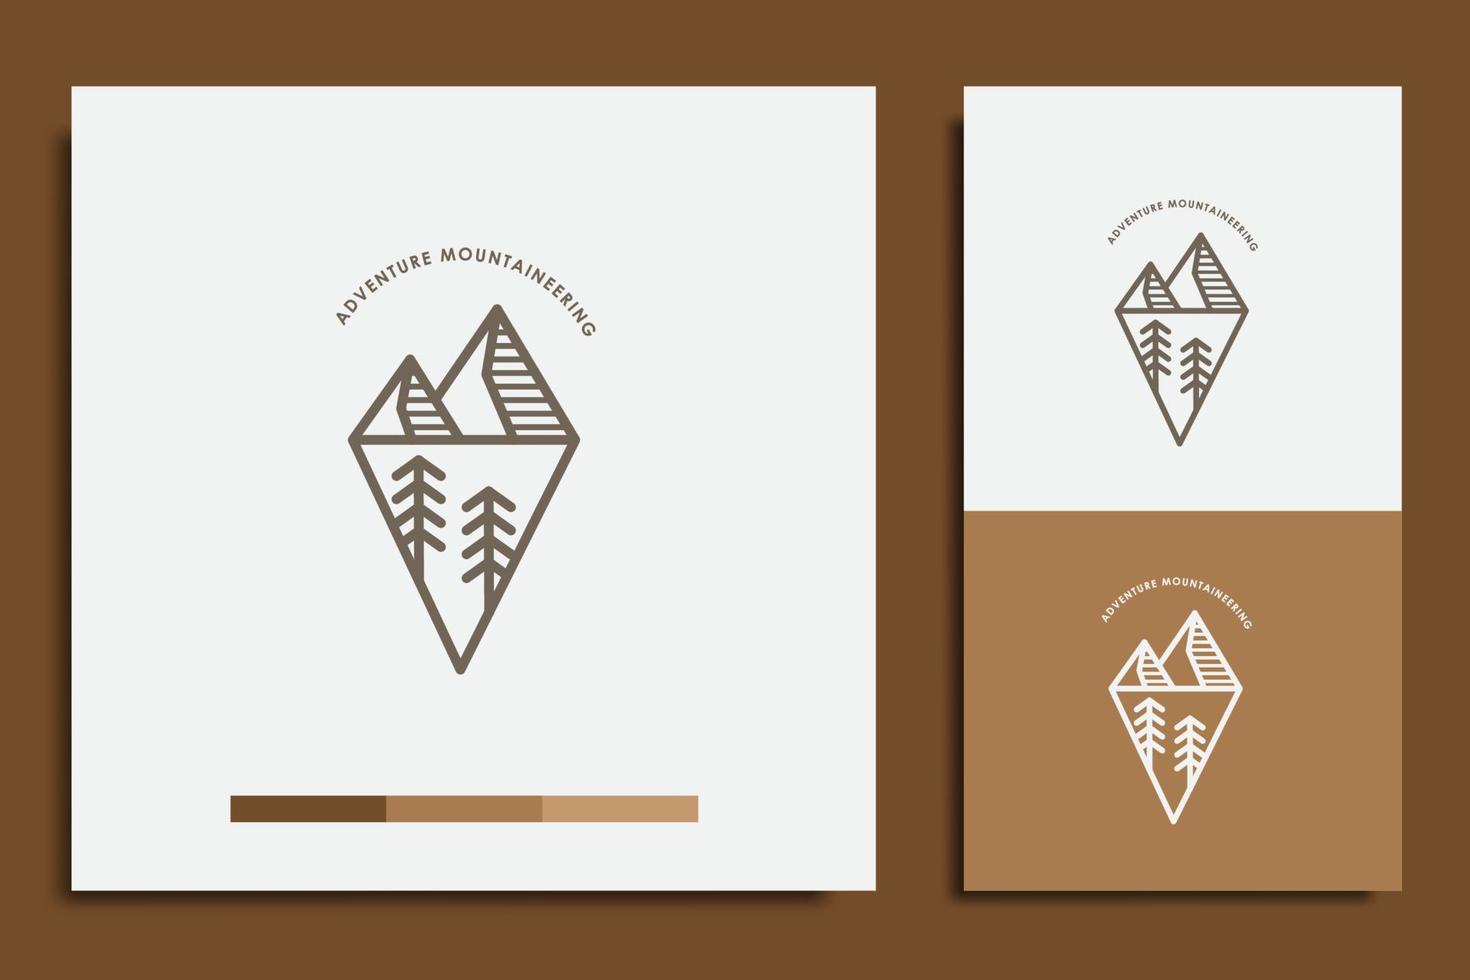 logo design template, with simple mountain adventure icon vector